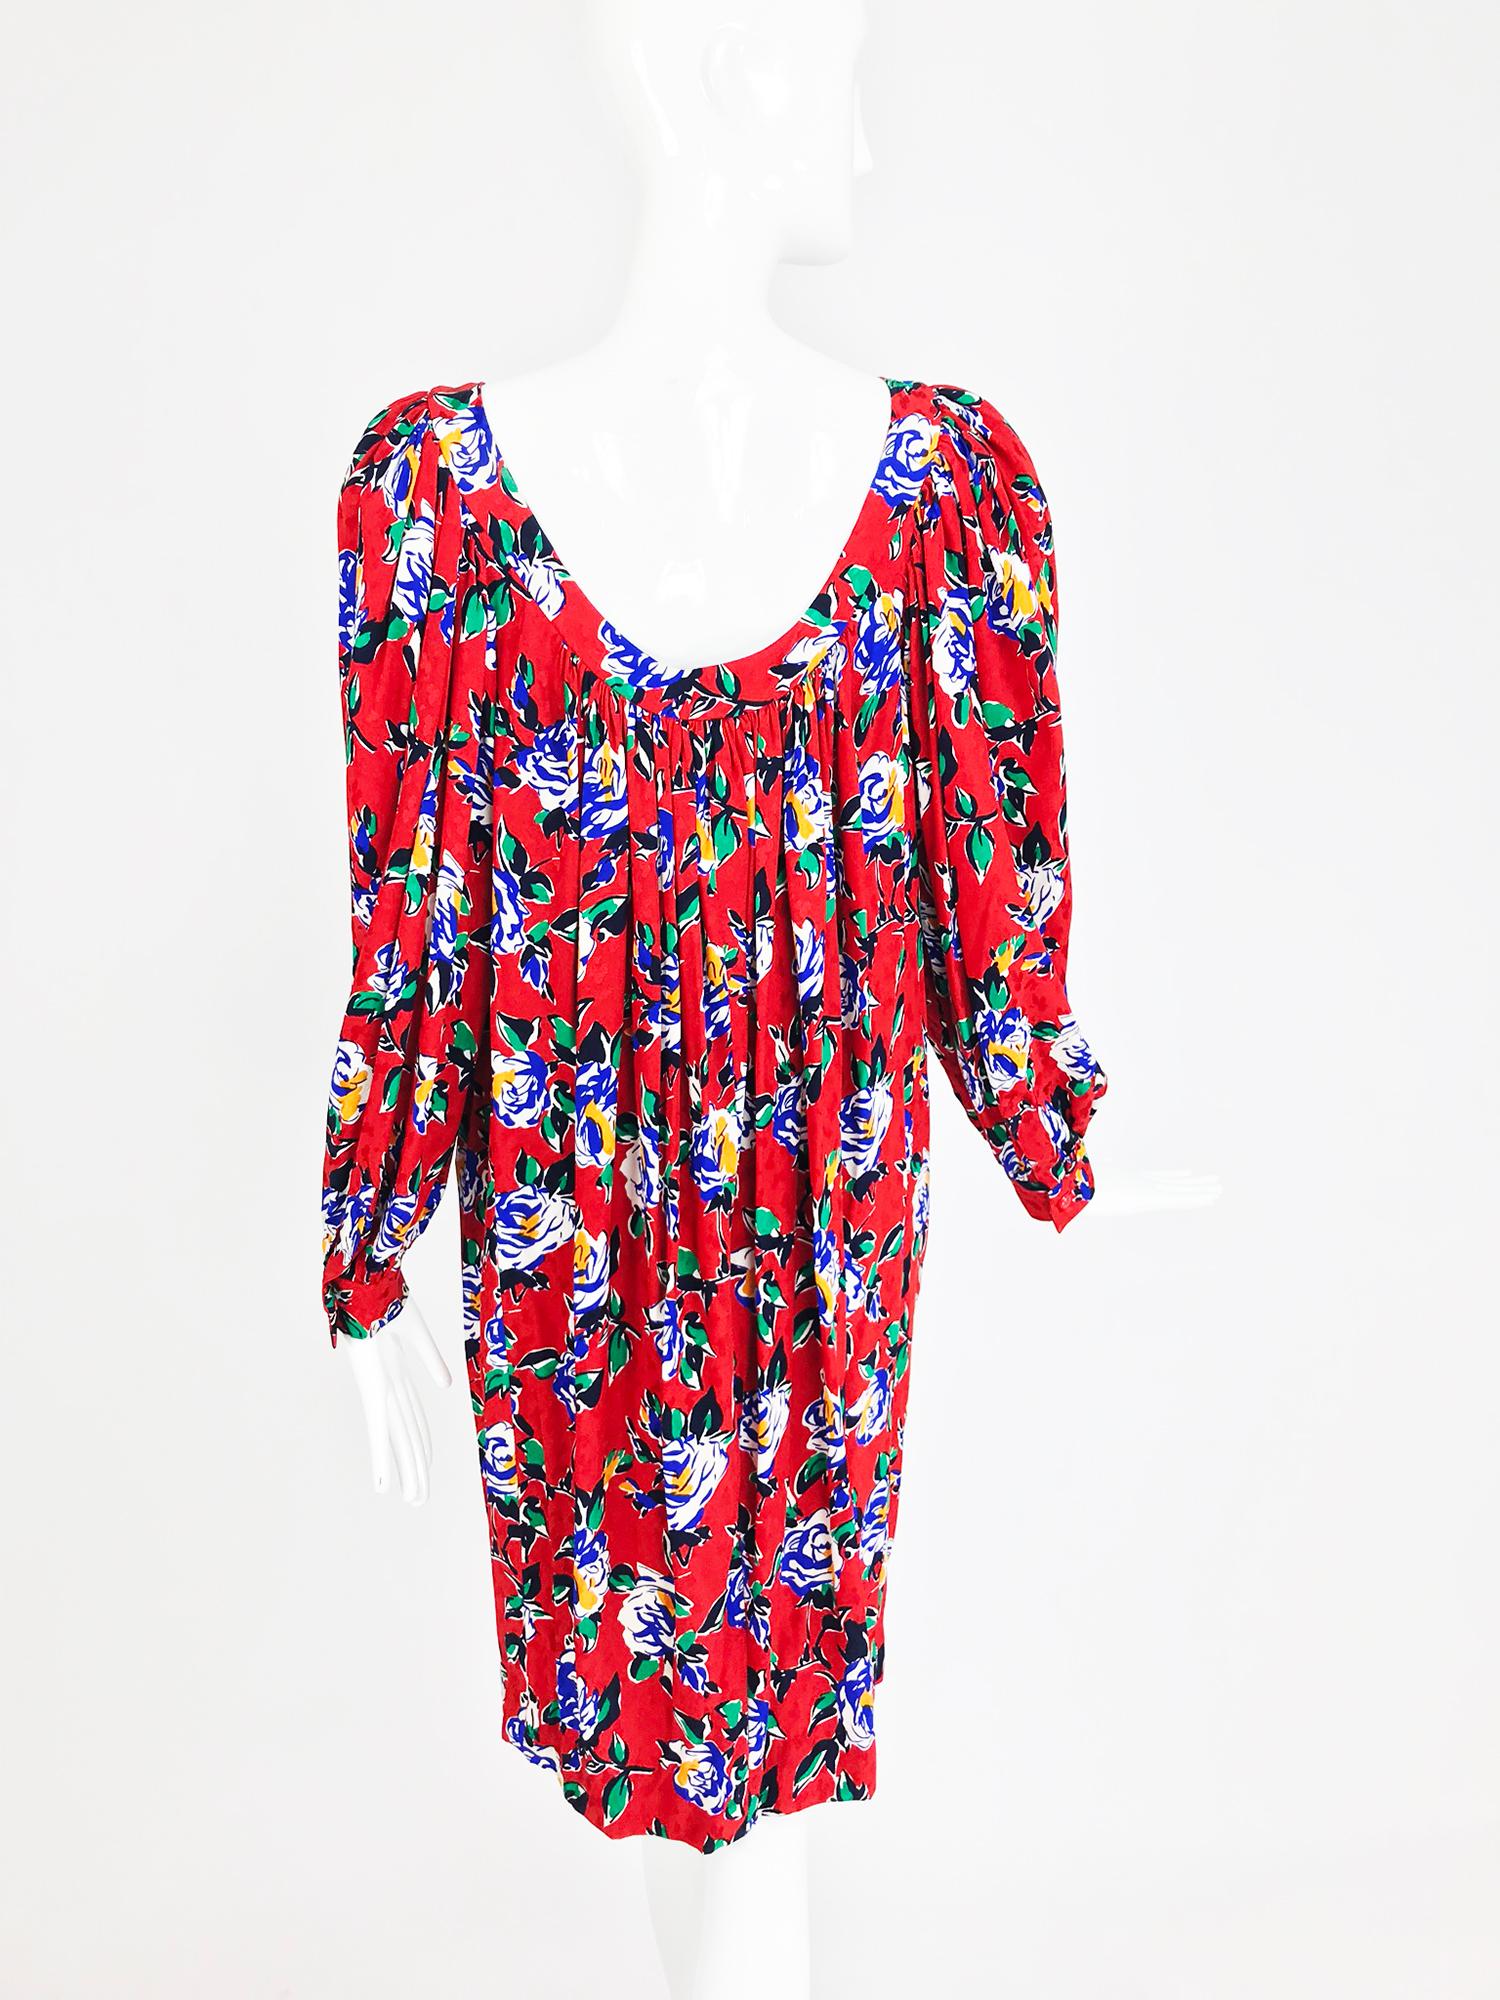 Yves Saint Laurent Red Floral Silk Jacquard Scoop Neck Dress 1990s 2